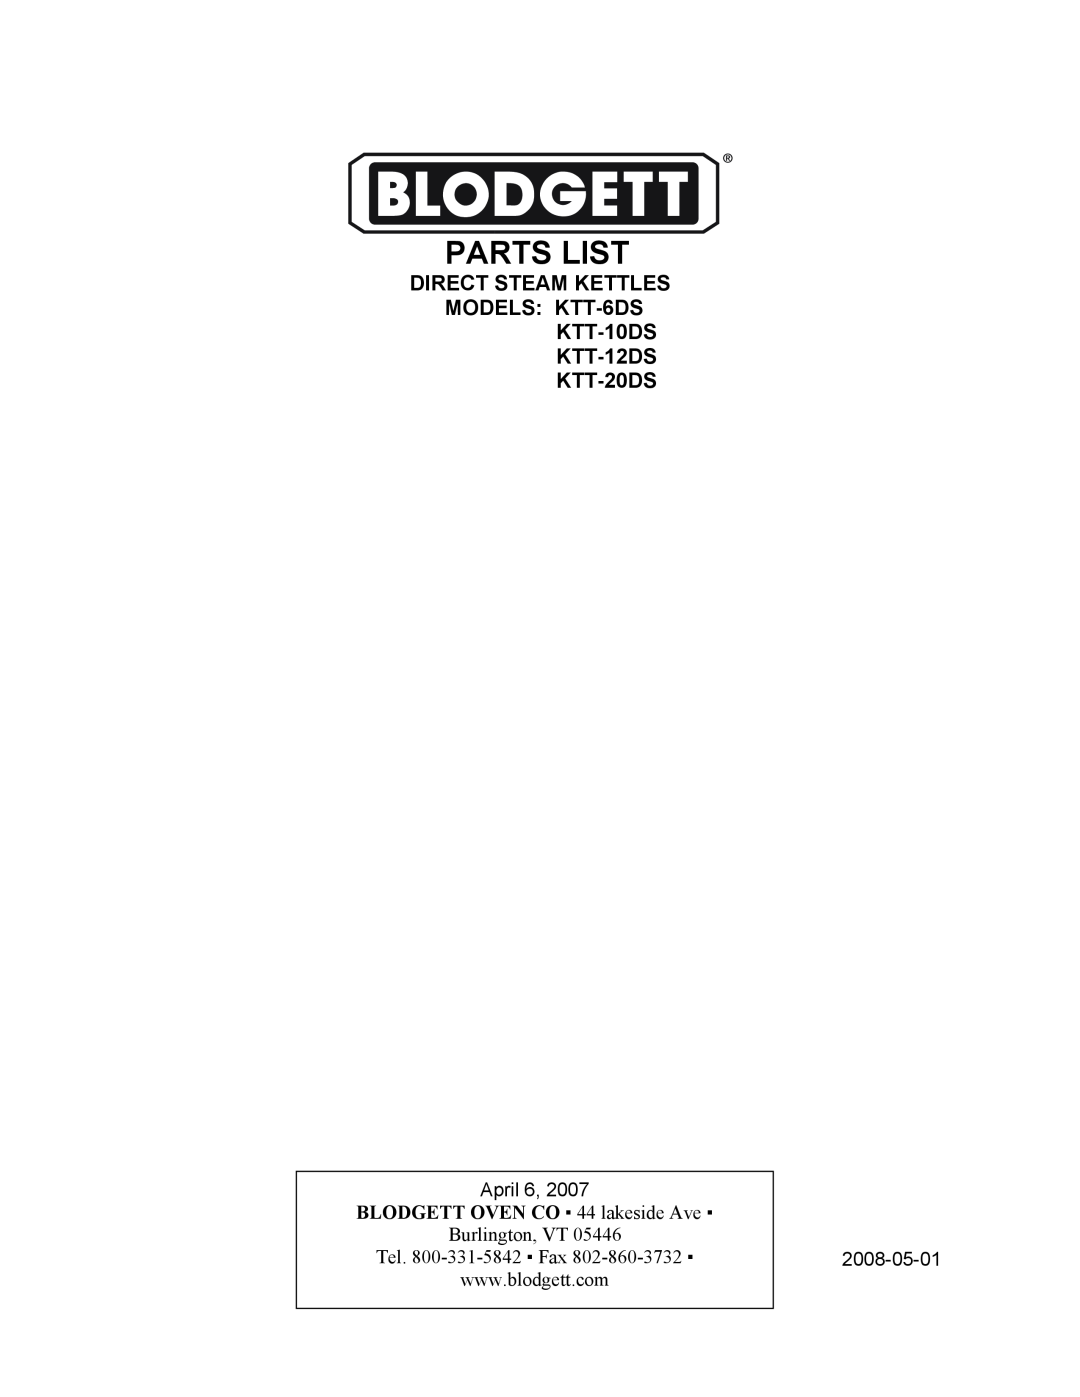 Blodgett manual Parts List, DIRECT STEAM KETTLES MODELS KTT-6DS KTT-10DS, KTT-12DS KTT-20DS 